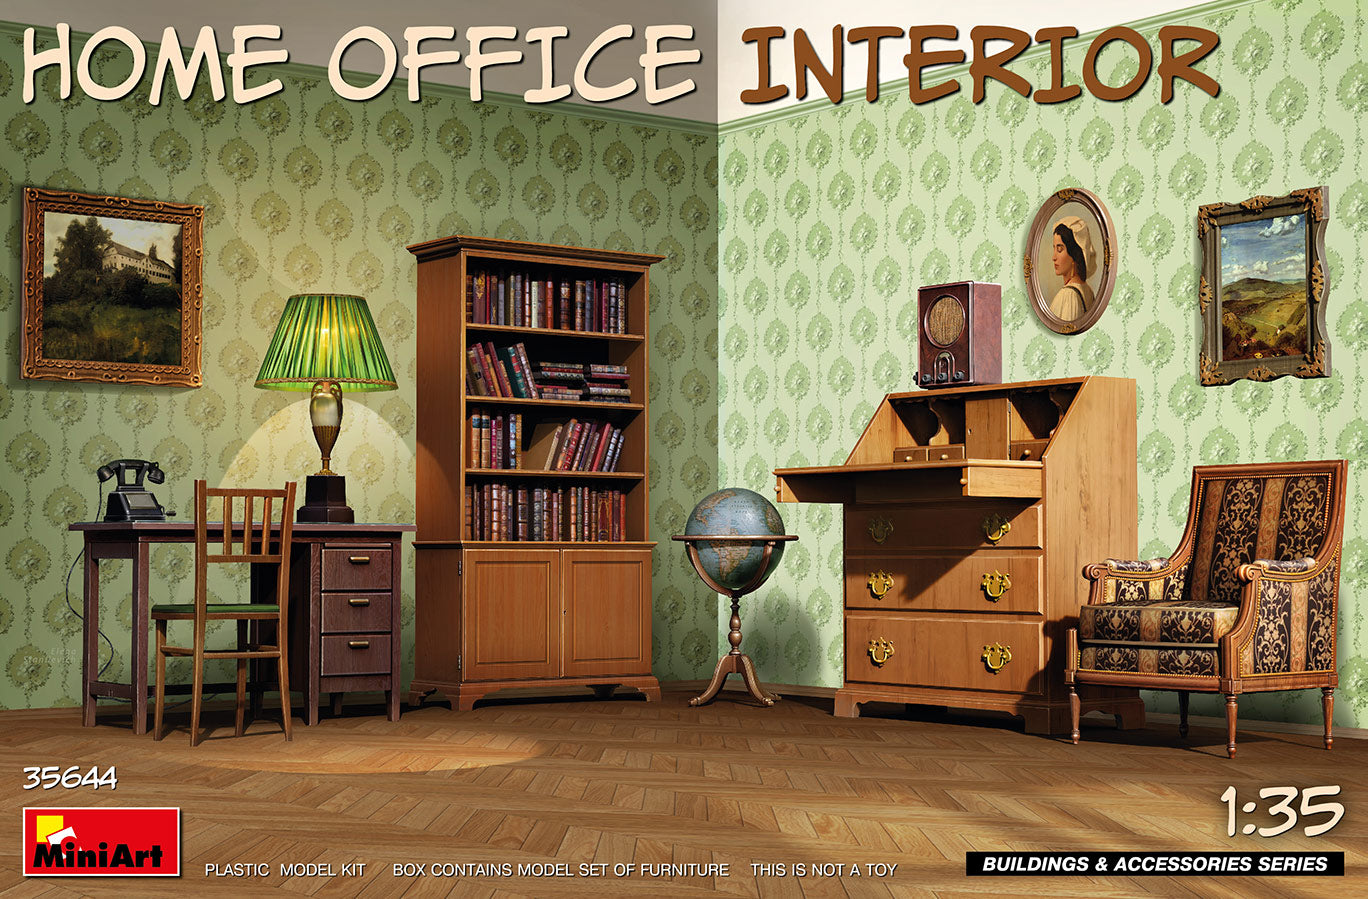 MiniArt 35644 1:35 Home Office Interior Furniture Plastic Model Kit